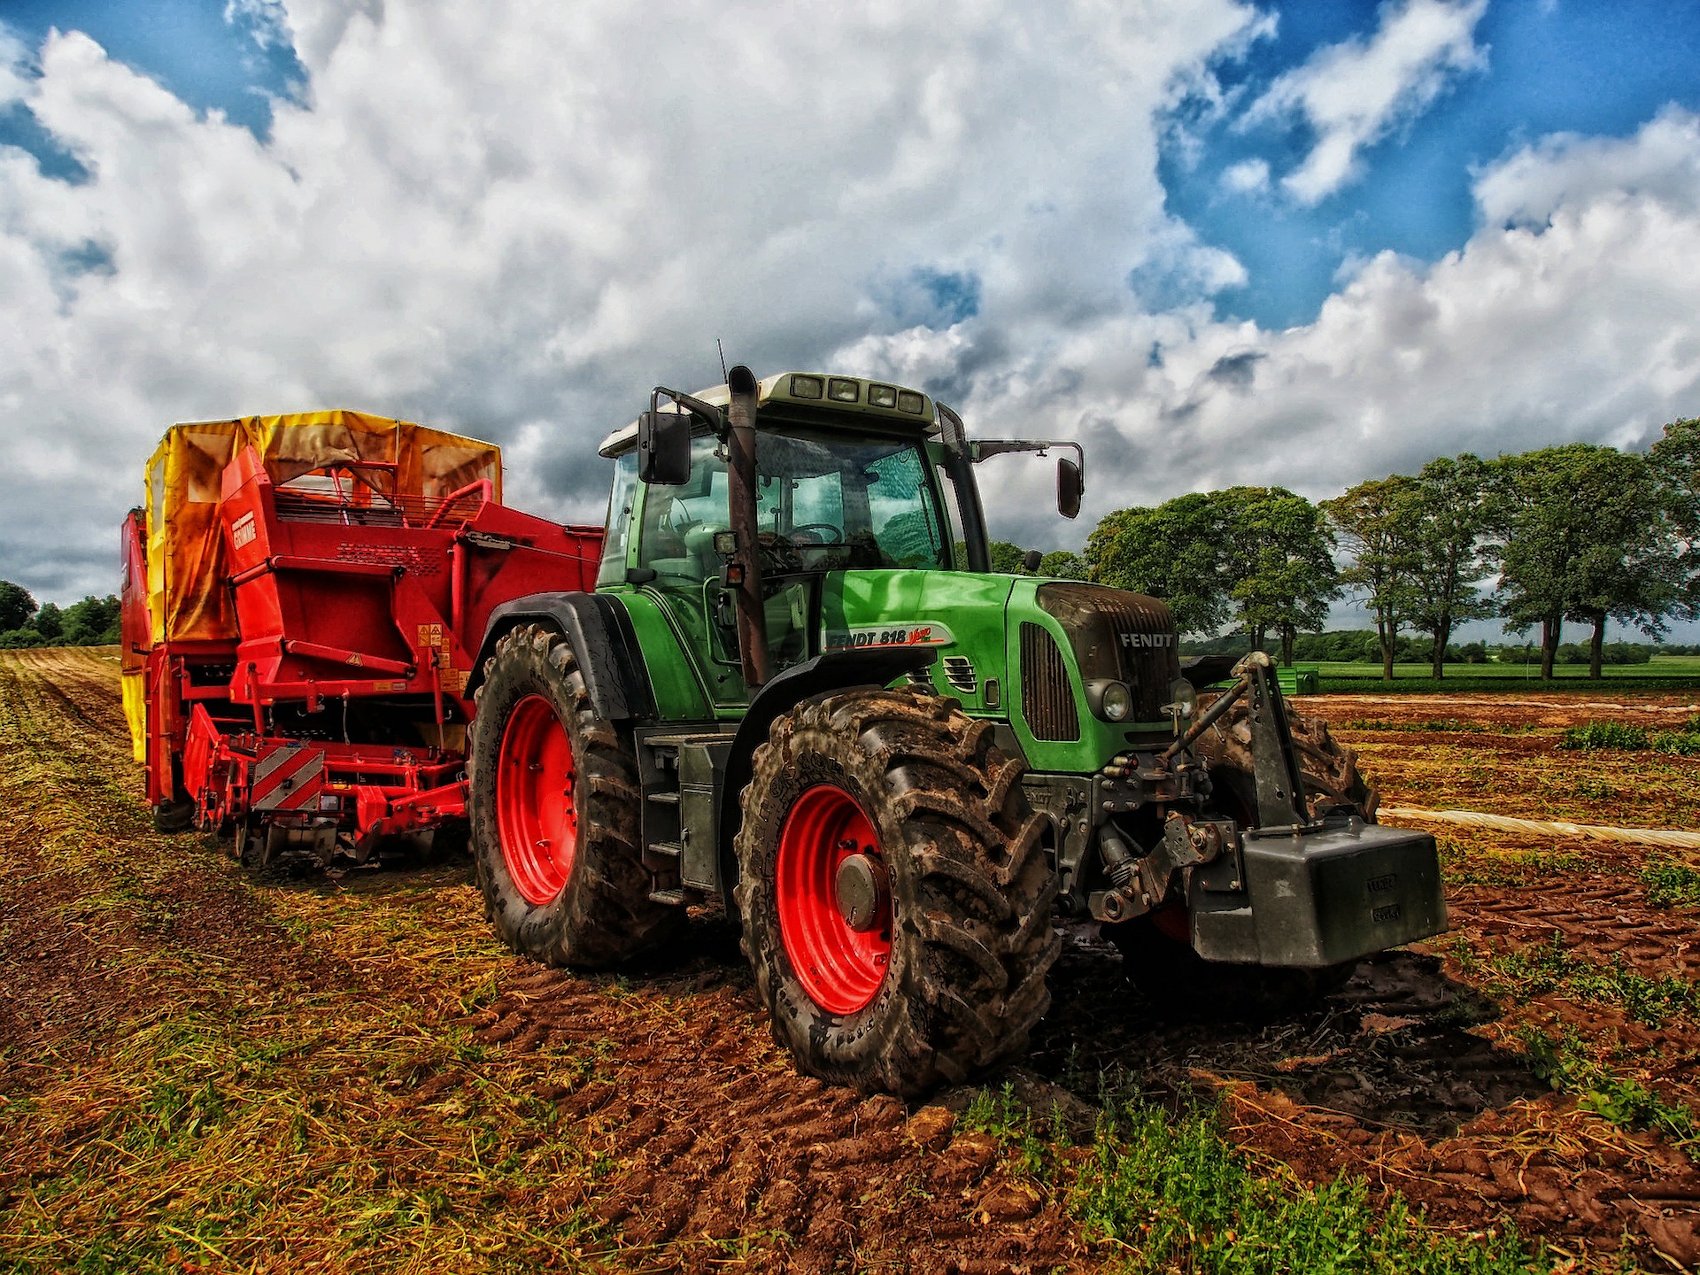 Farming Tractor - Image by David Mark